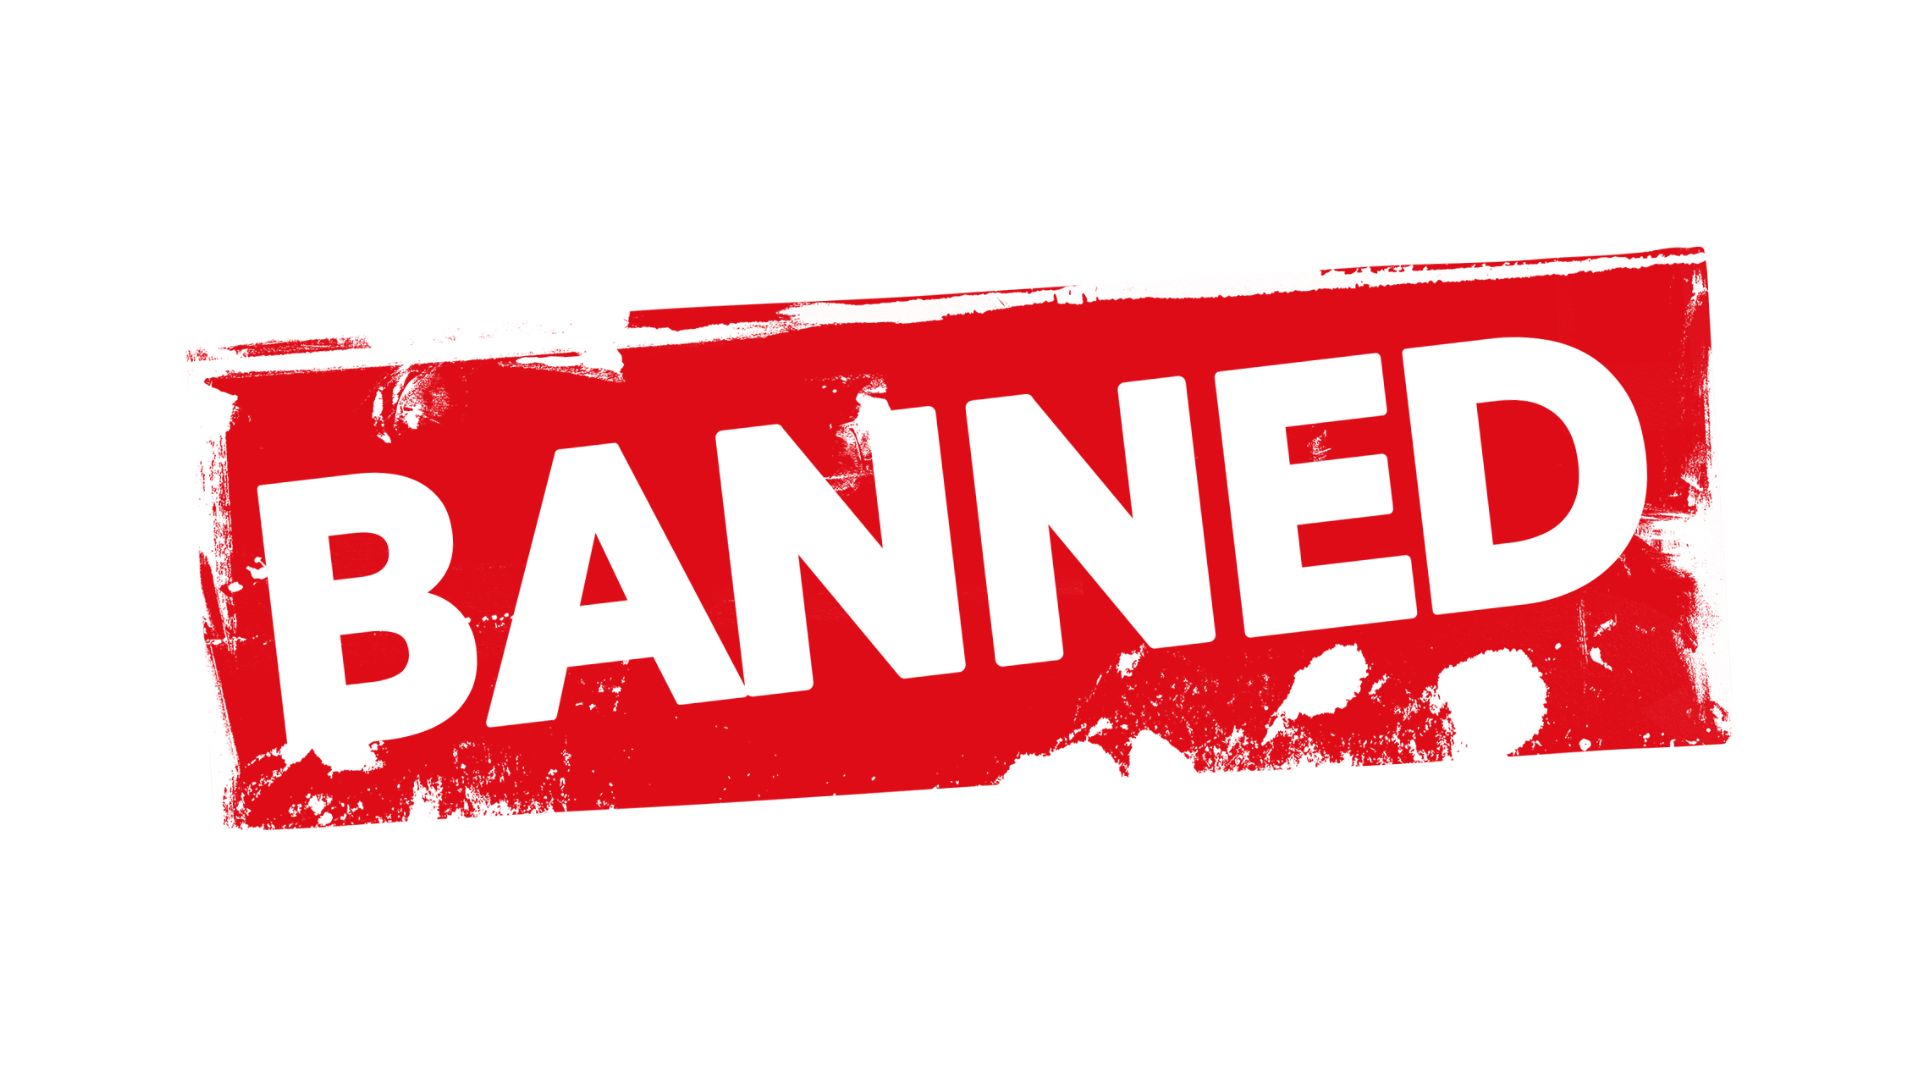 Anybunny Modi - Porn sites banned: Government bans 63 porn sites - Smartprix